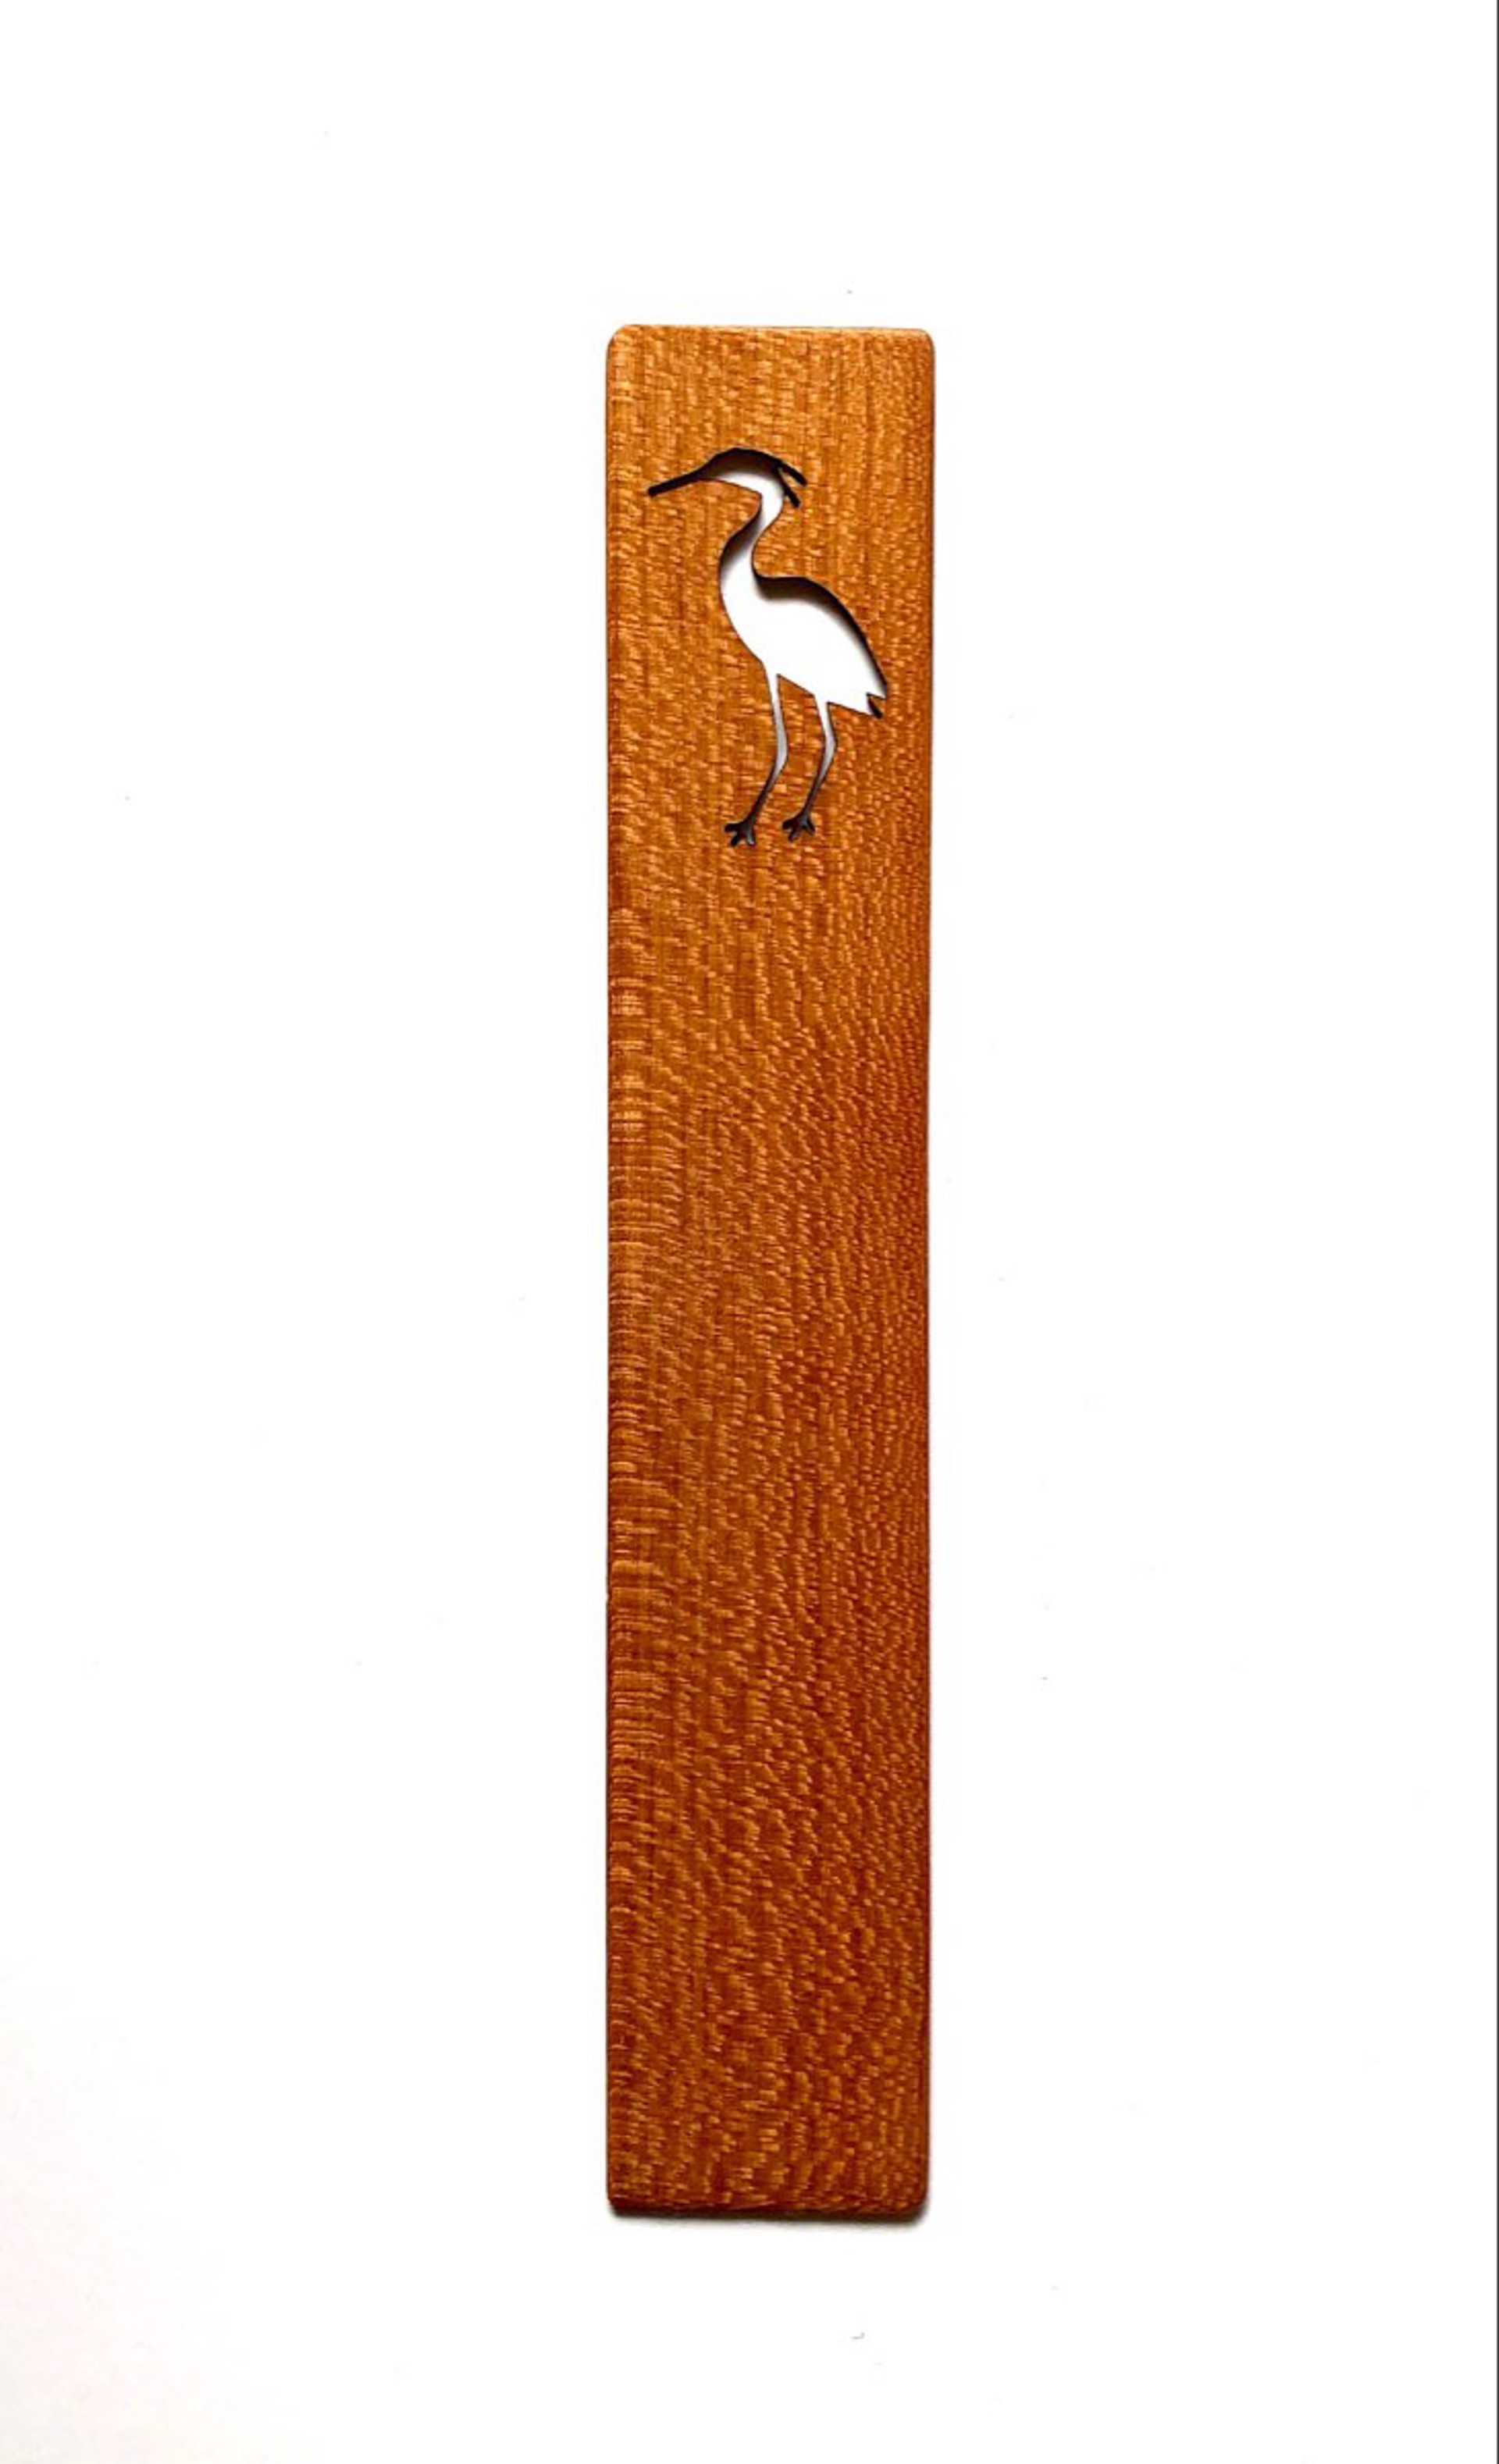 Heron Bookmark by Wood Wizard